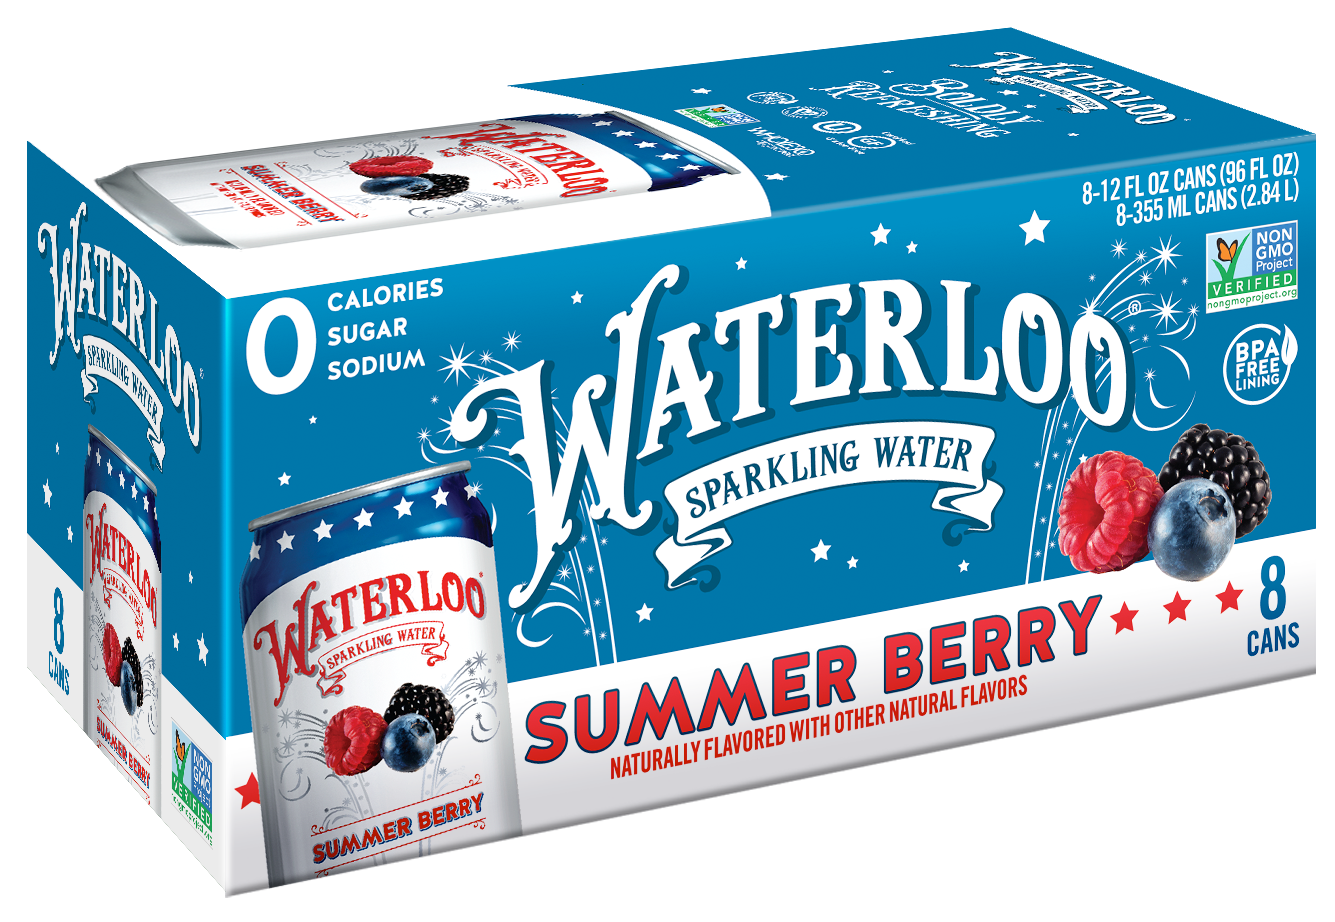 Waterloo Summer Berry Sparkling Water 3 innerpacks per case 96.0 fl